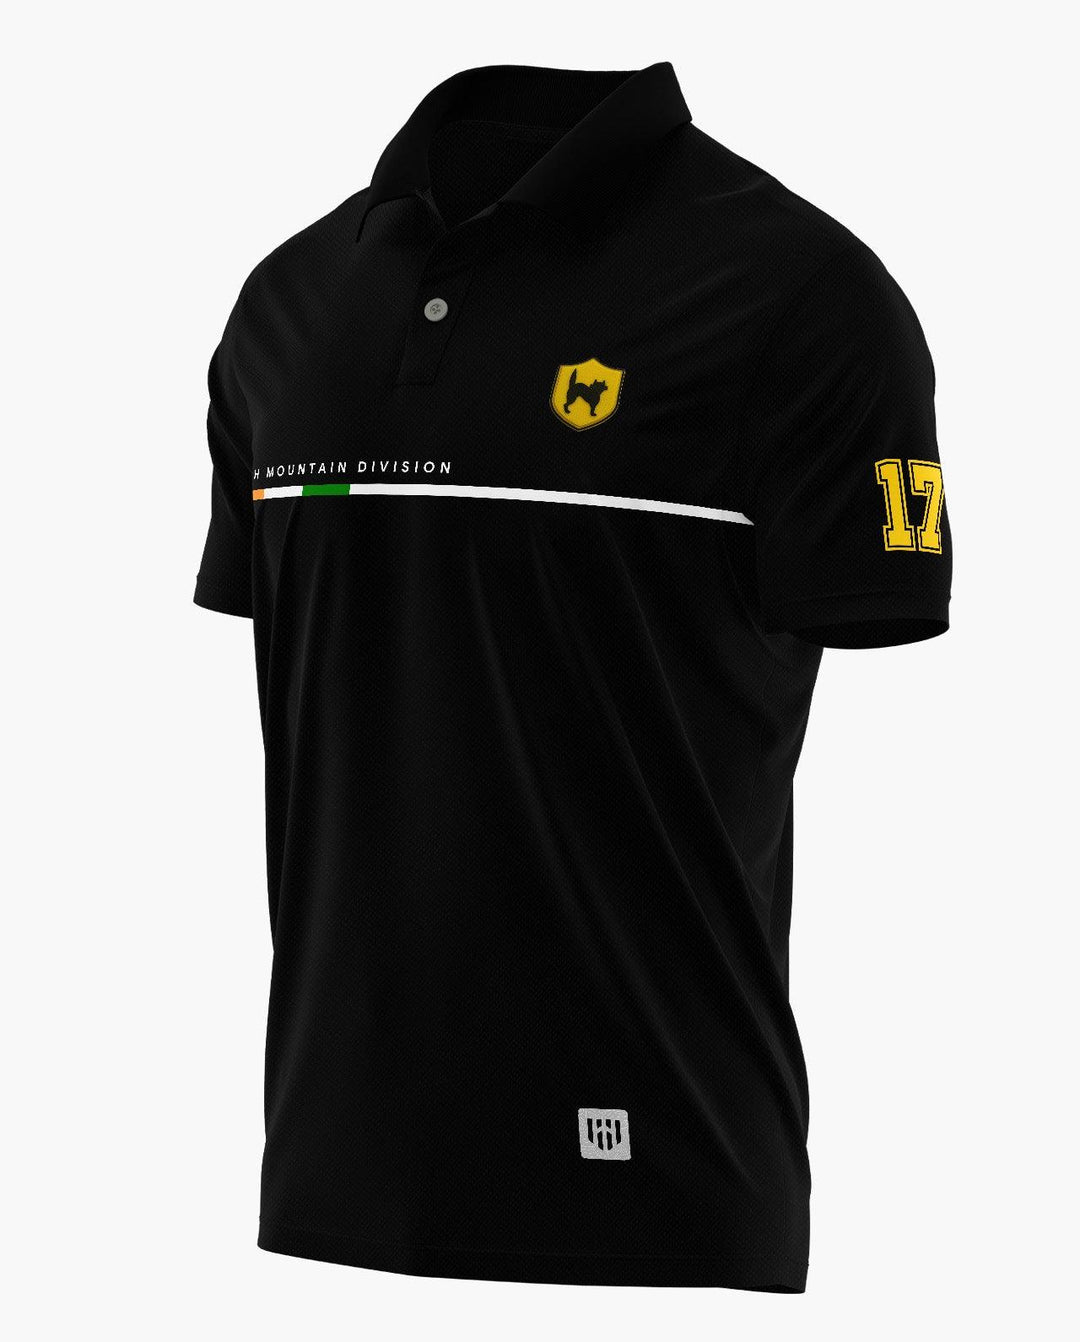 Black Cat Division Polo T-Shirt - Aero Armour